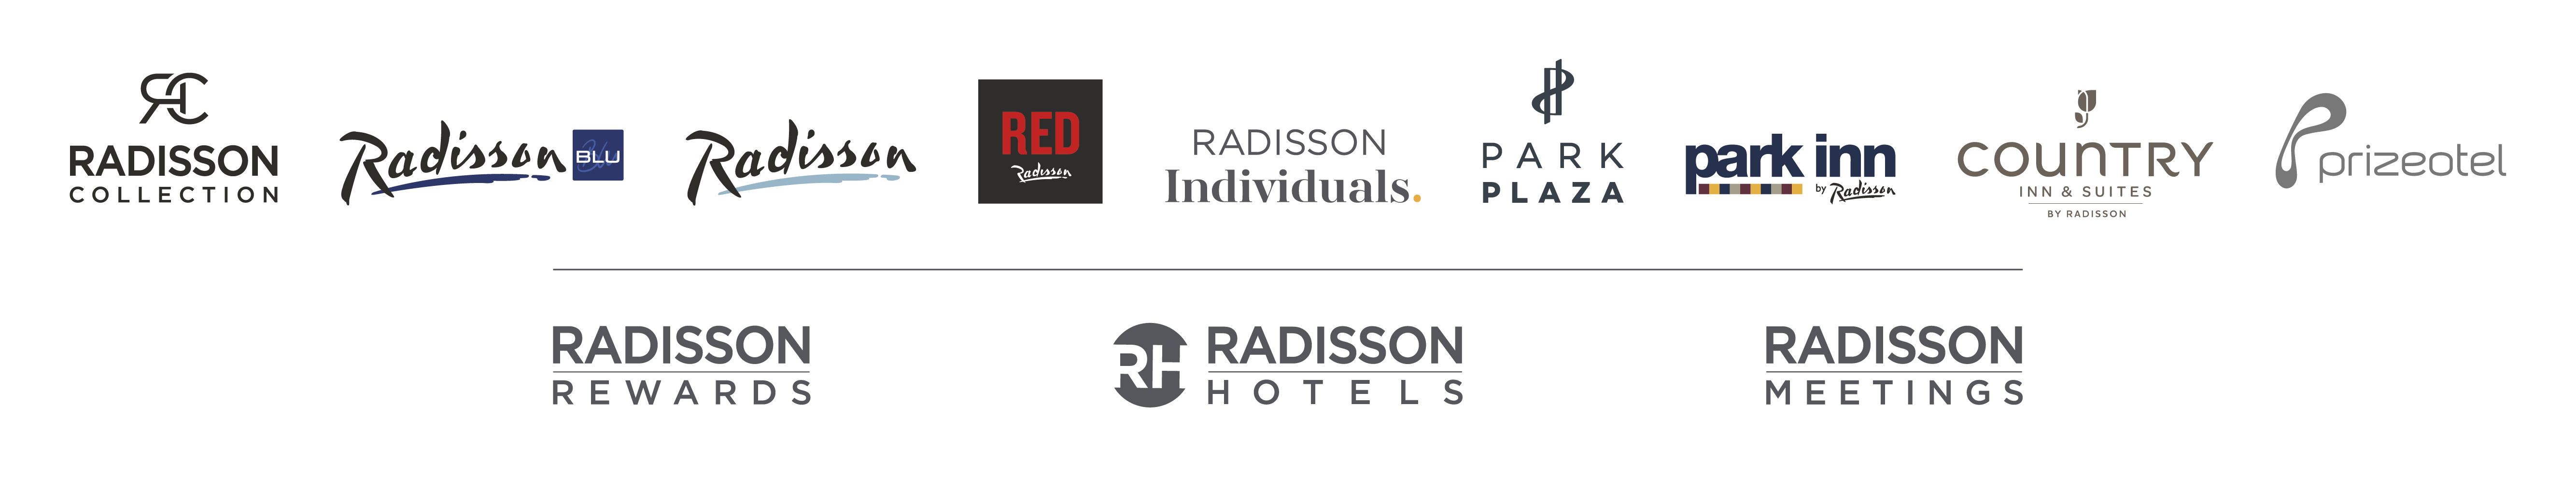 The Radisson brand enters Cape Town